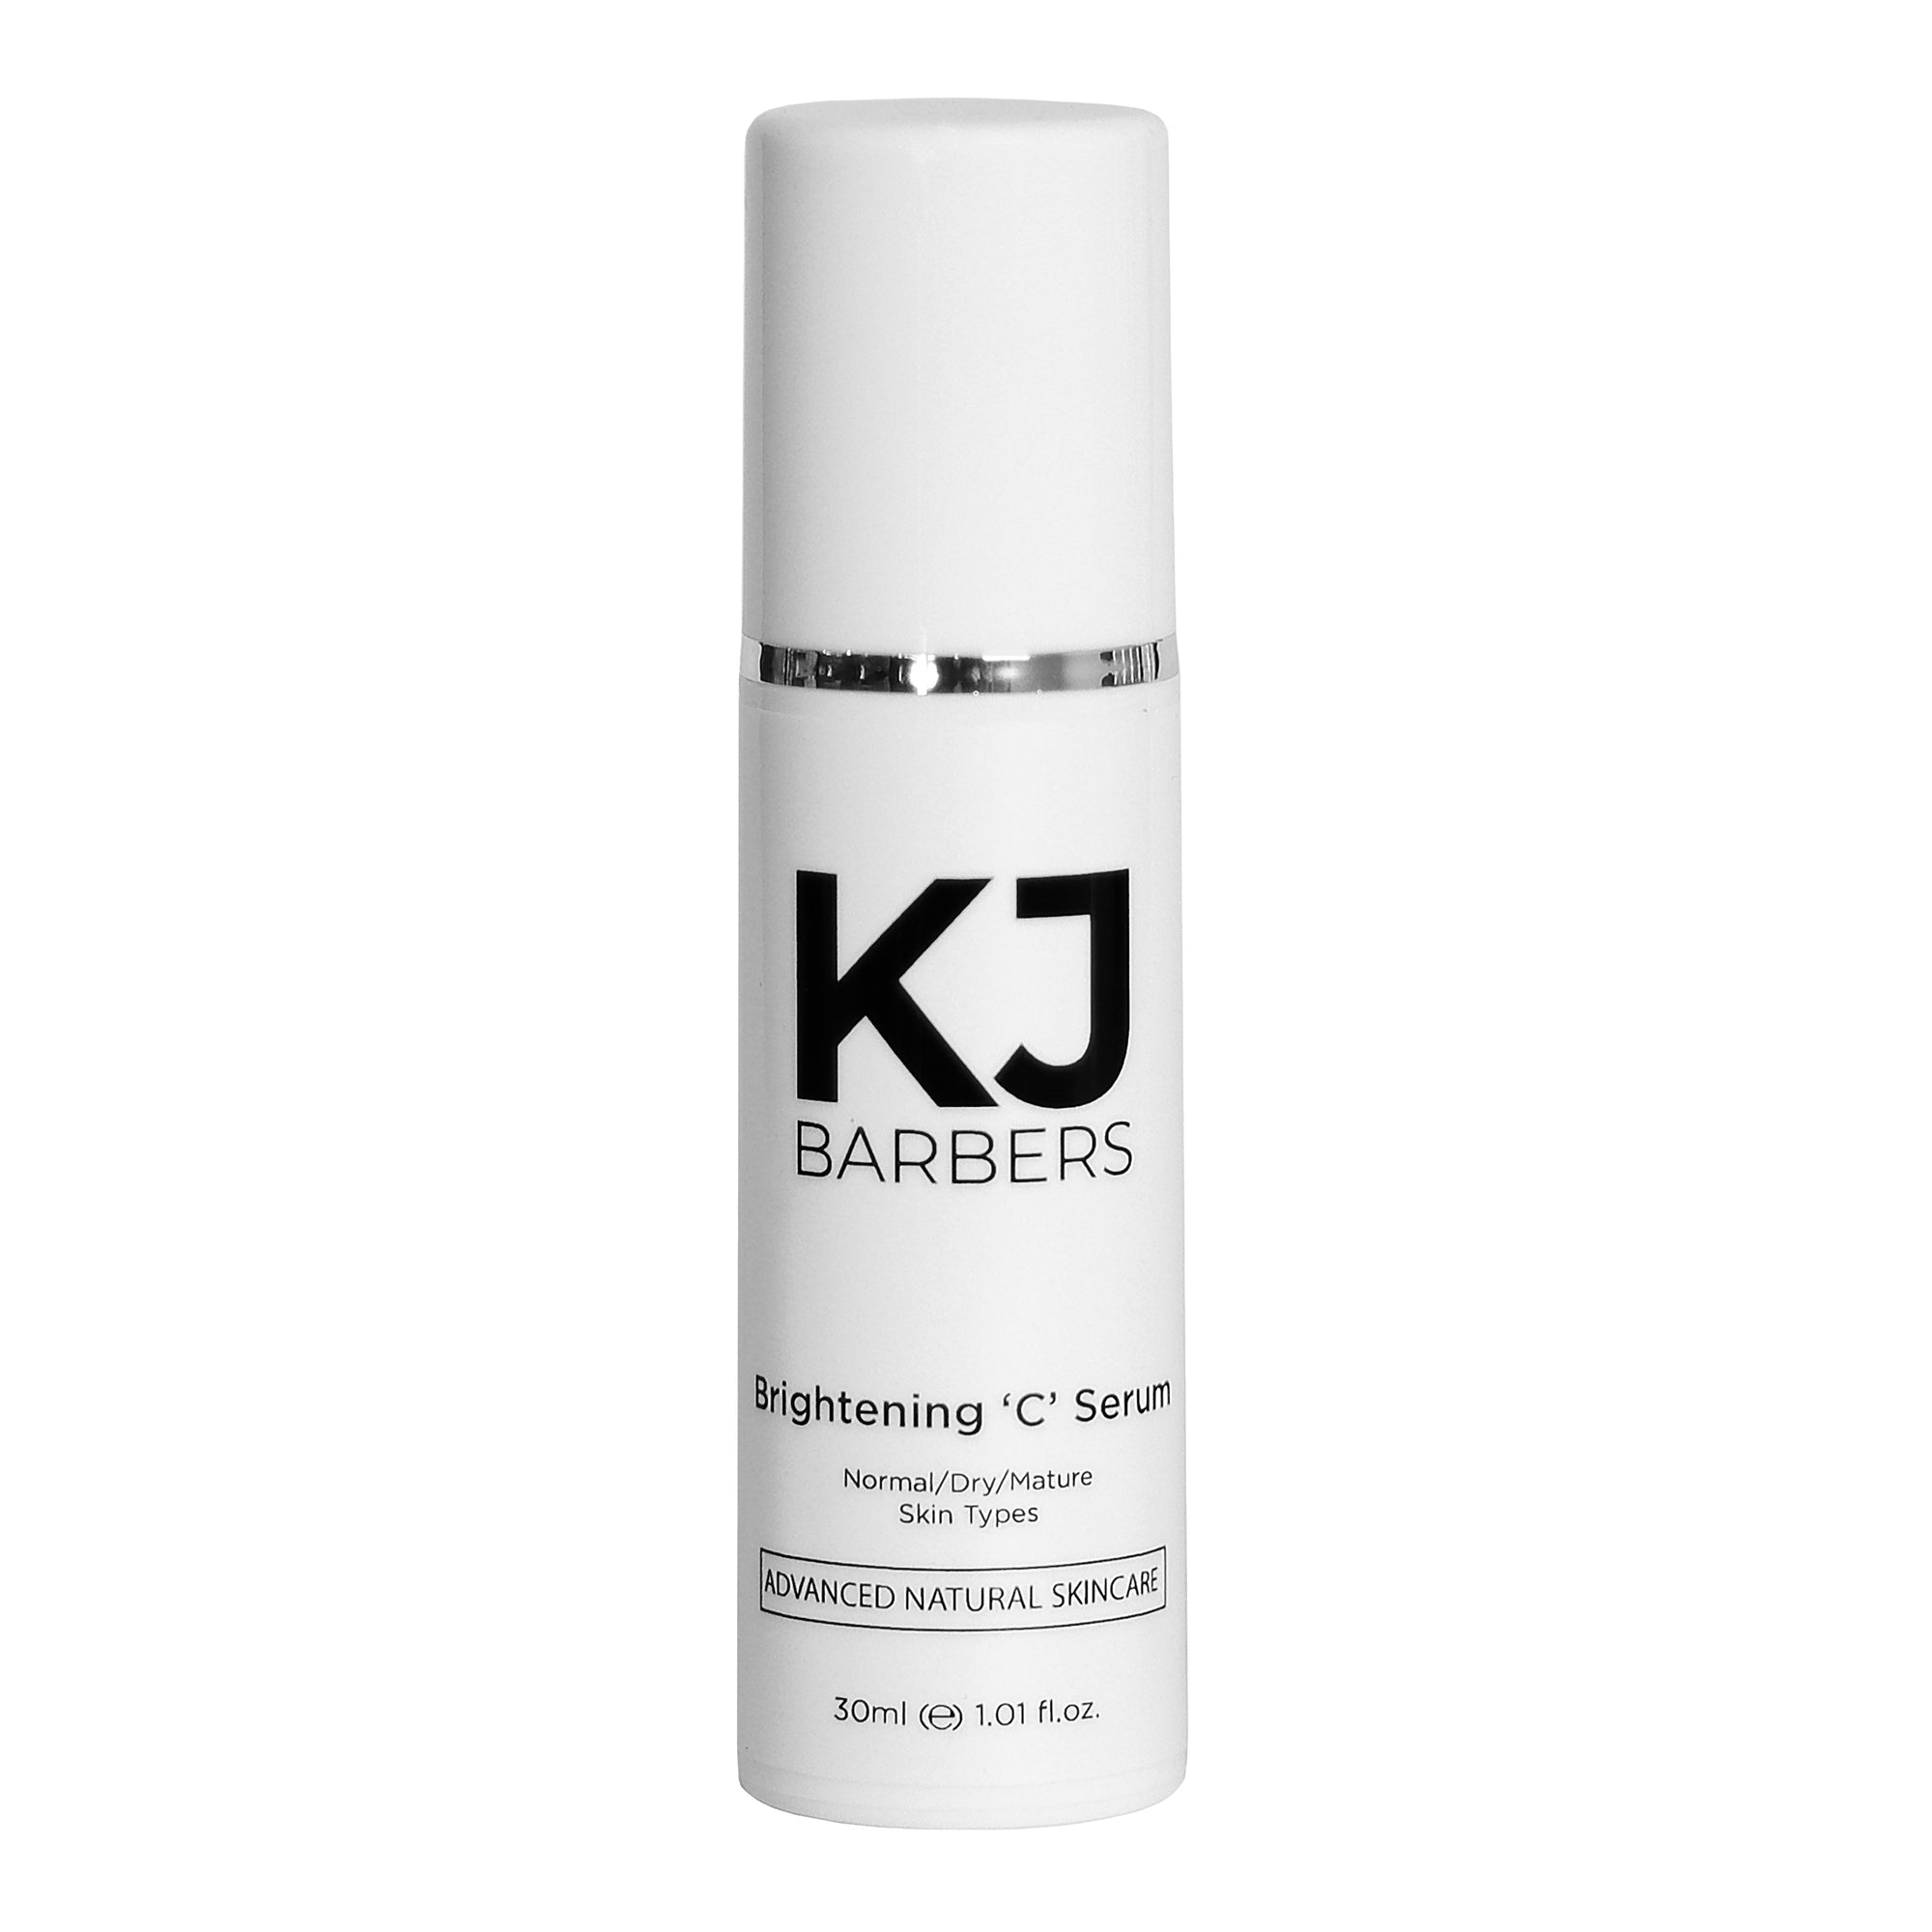 KJ Barbers skin serum, high in Vitamin C to impair collagen breakdown processes.